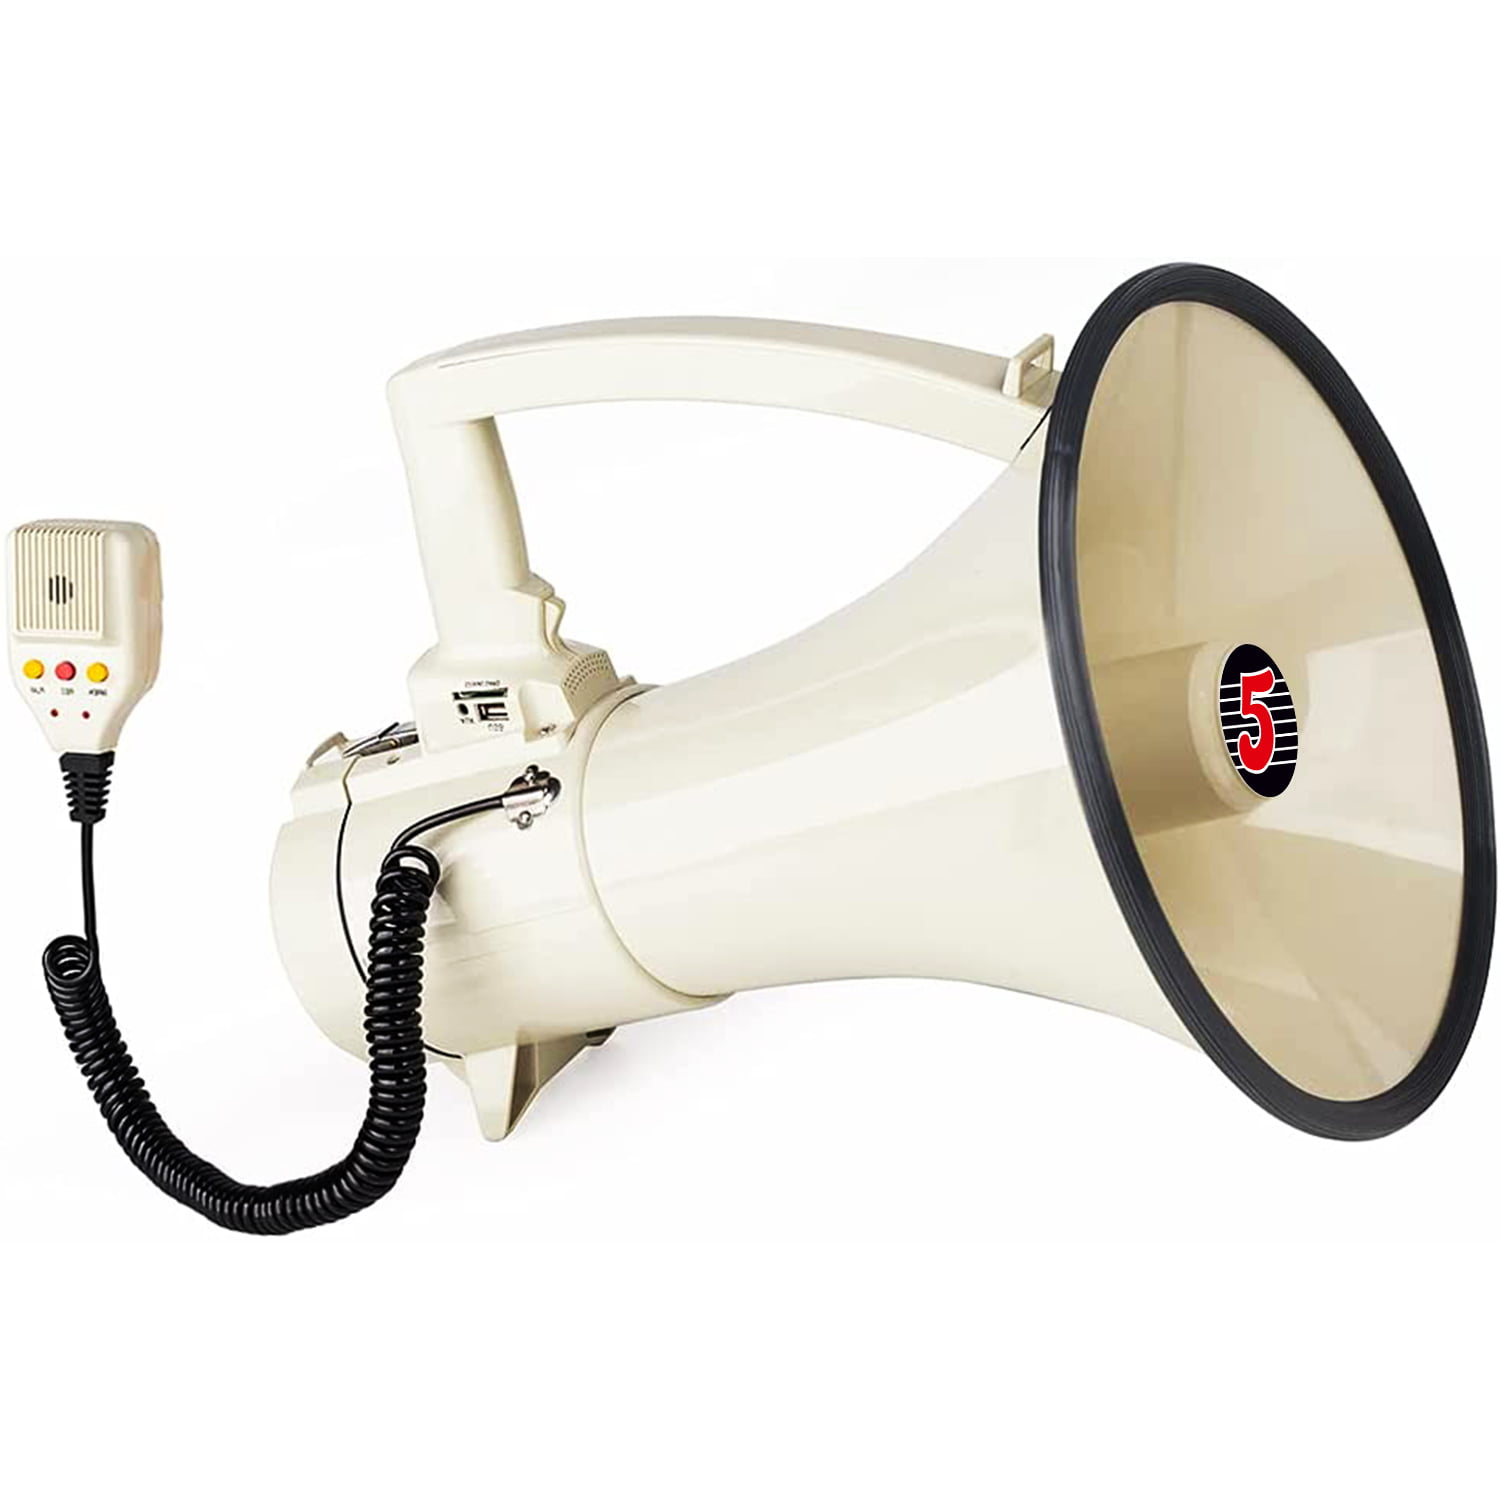 5 CORE Megaphone Handheld Bullhorn Loudspeaker Cheer Bull Horn Speaker  Megaphono with Mic Siren Sling Strap Portable Built-in Voice Recorder 138  RU 